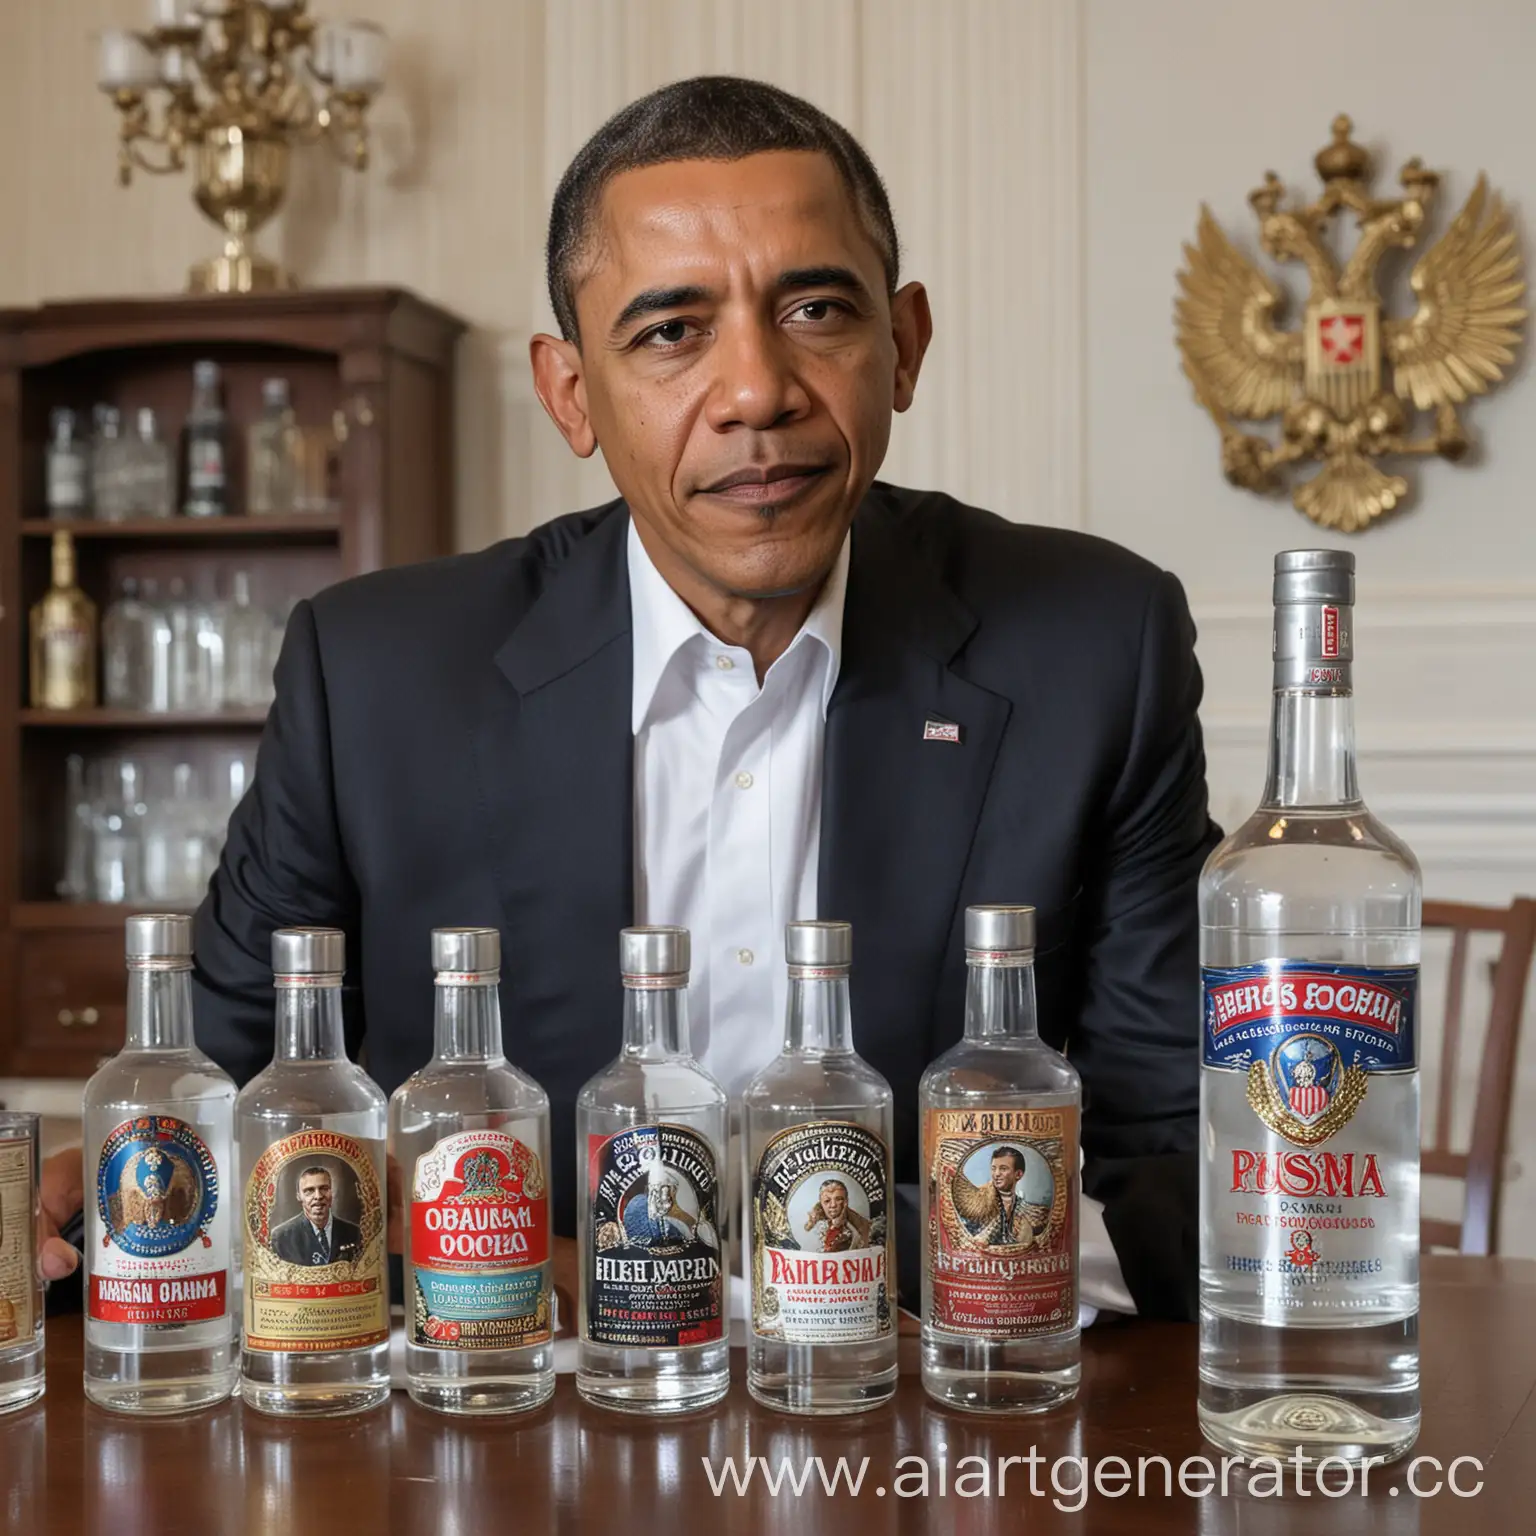 Barack-Obama-Enjoying-Russian-Vodka-with-Friends